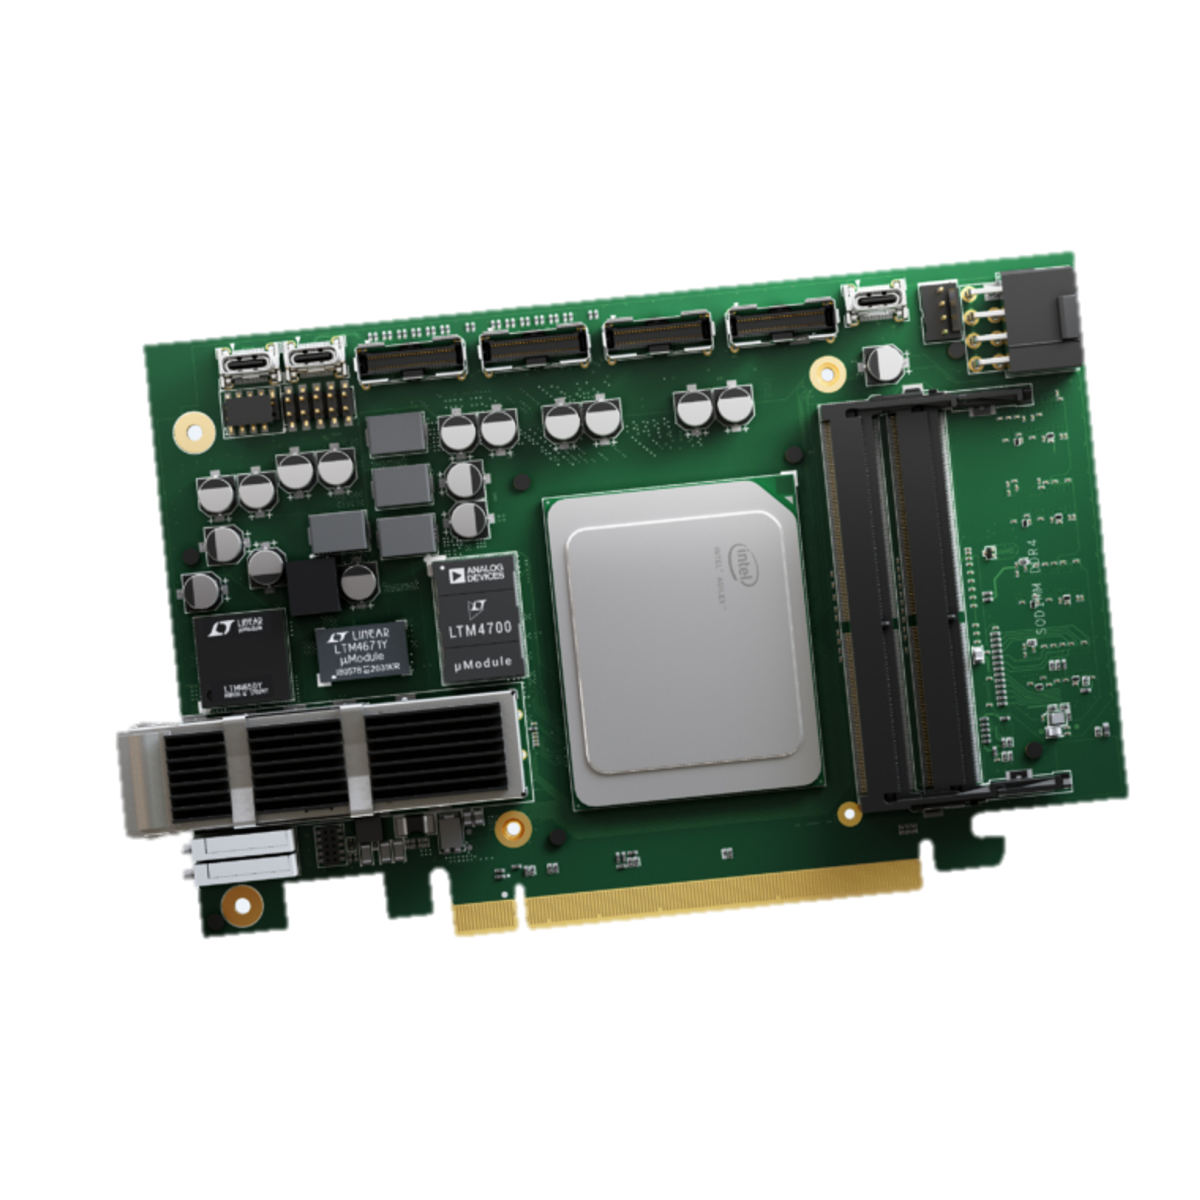 Agilex I-series SOC FPGA PCIe Board